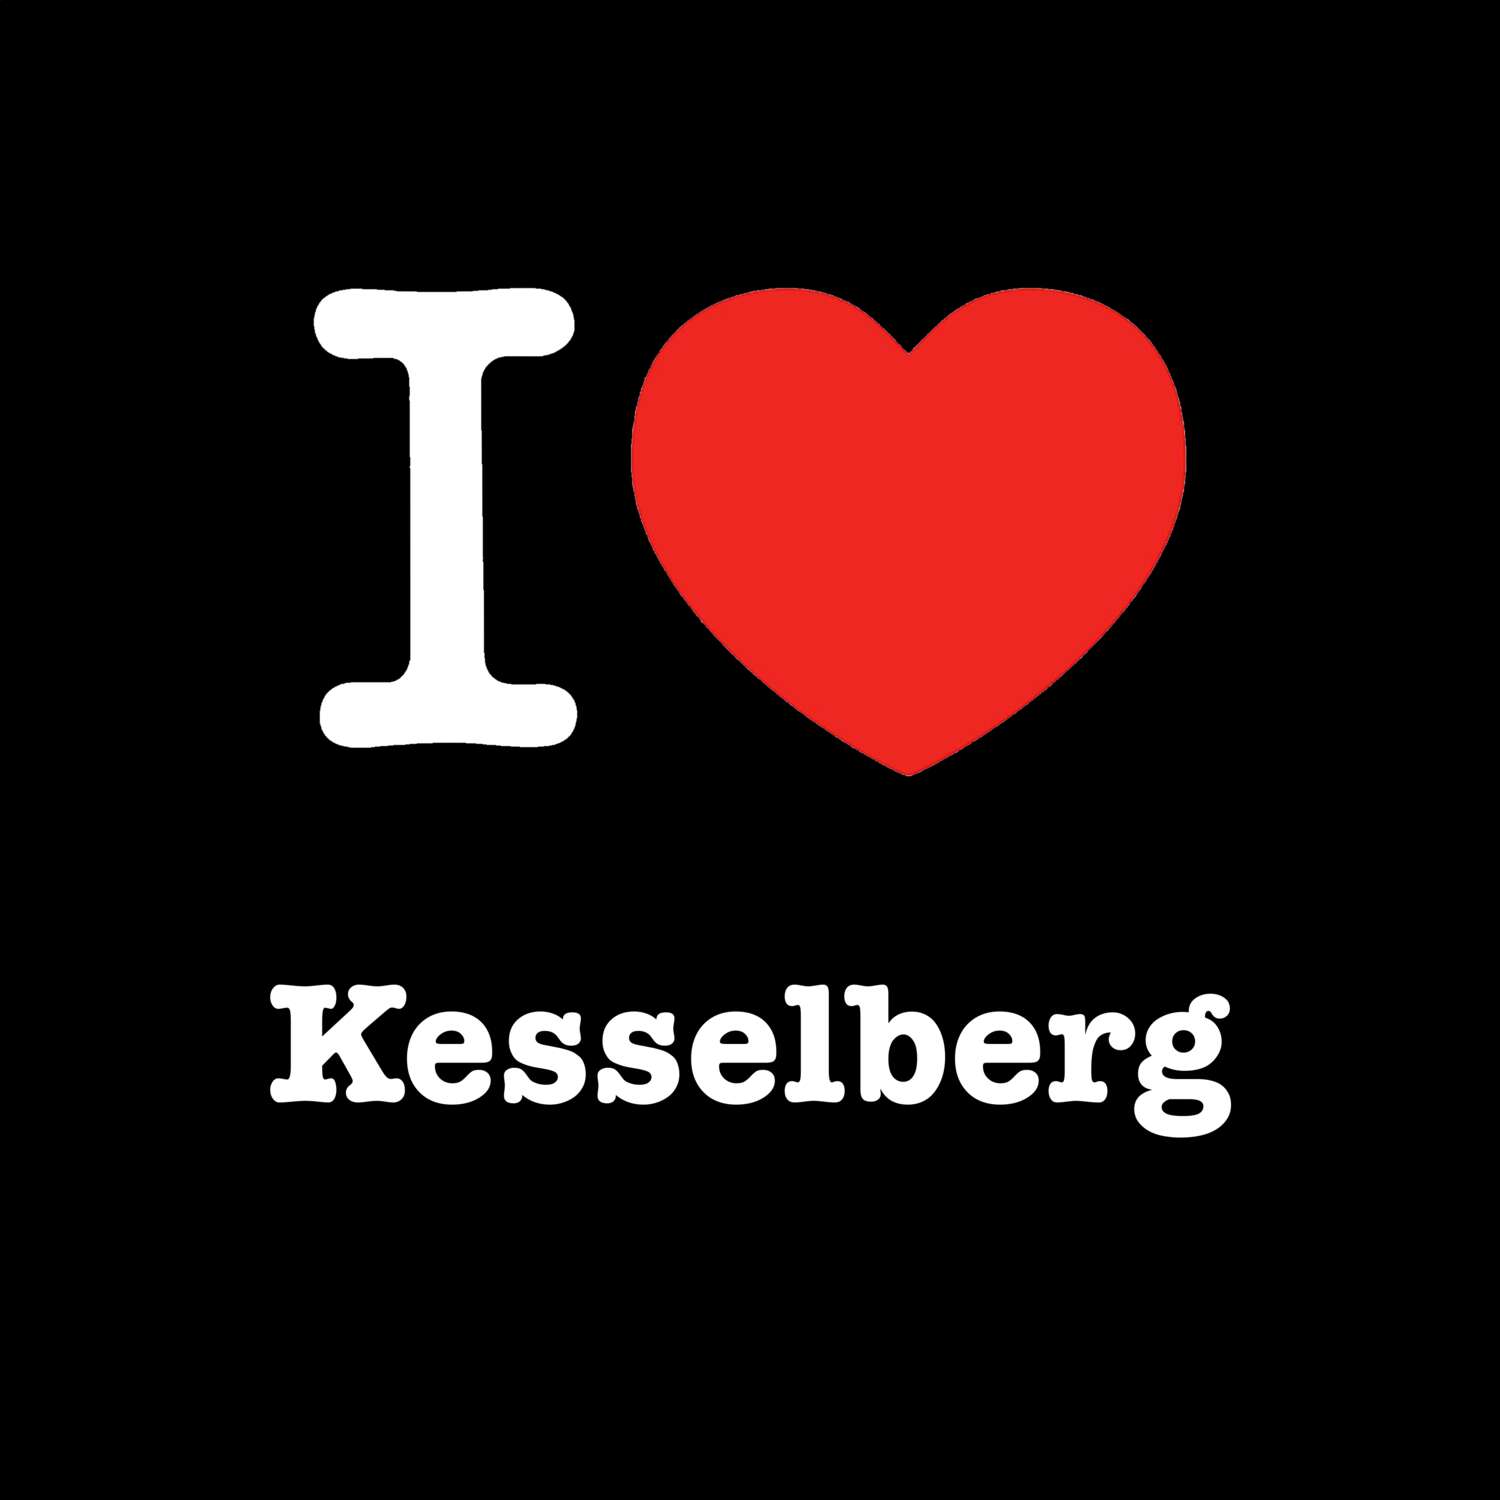 Kesselberg T-Shirt »I love«